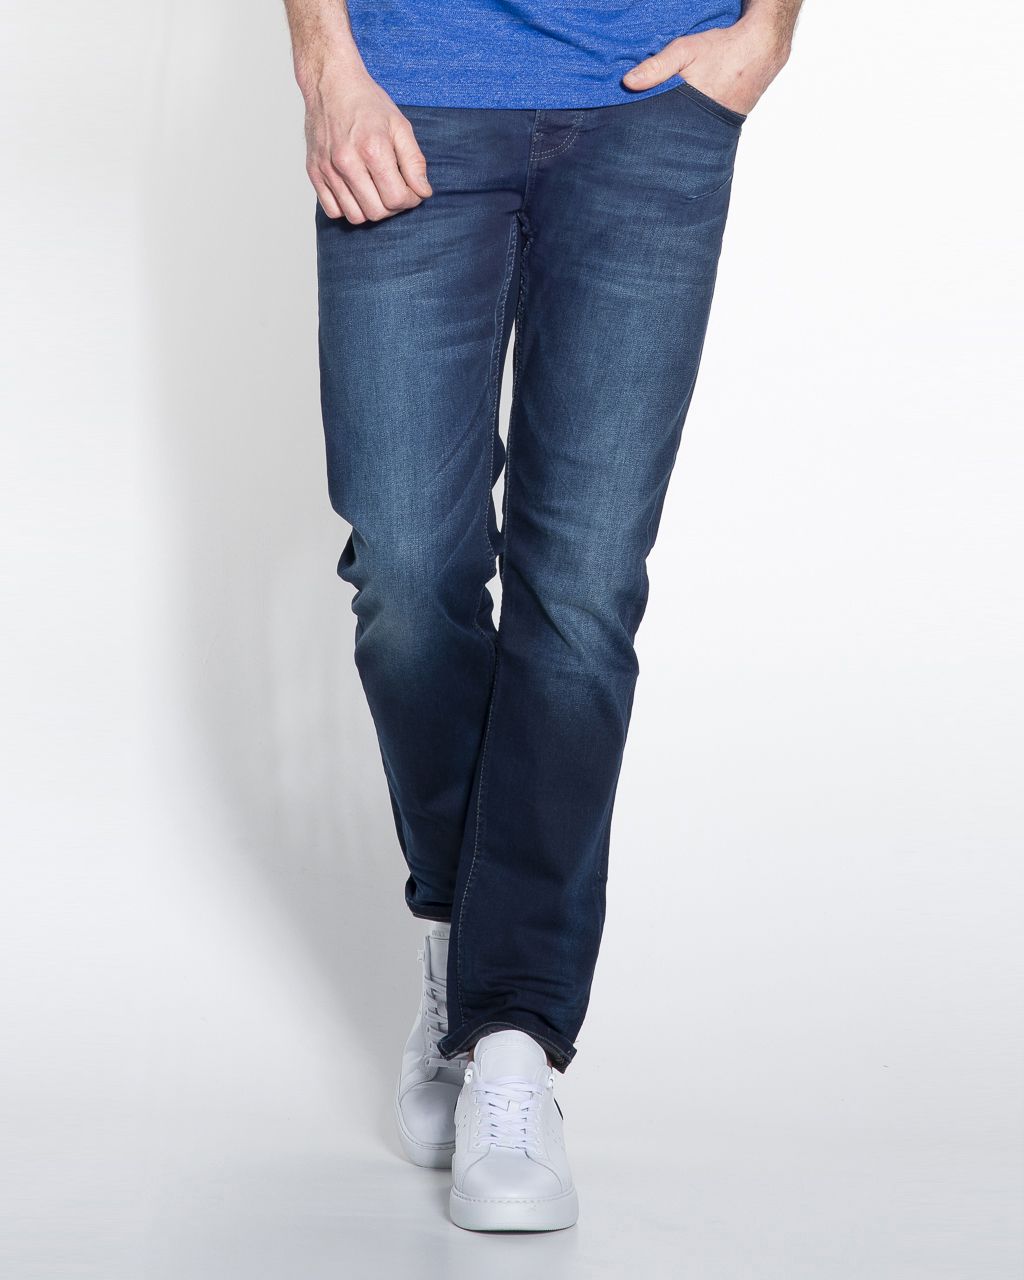 naaimachine Afwijzen Converteren PME Legend Skyhawk Jeans | Shop nu - OFM.